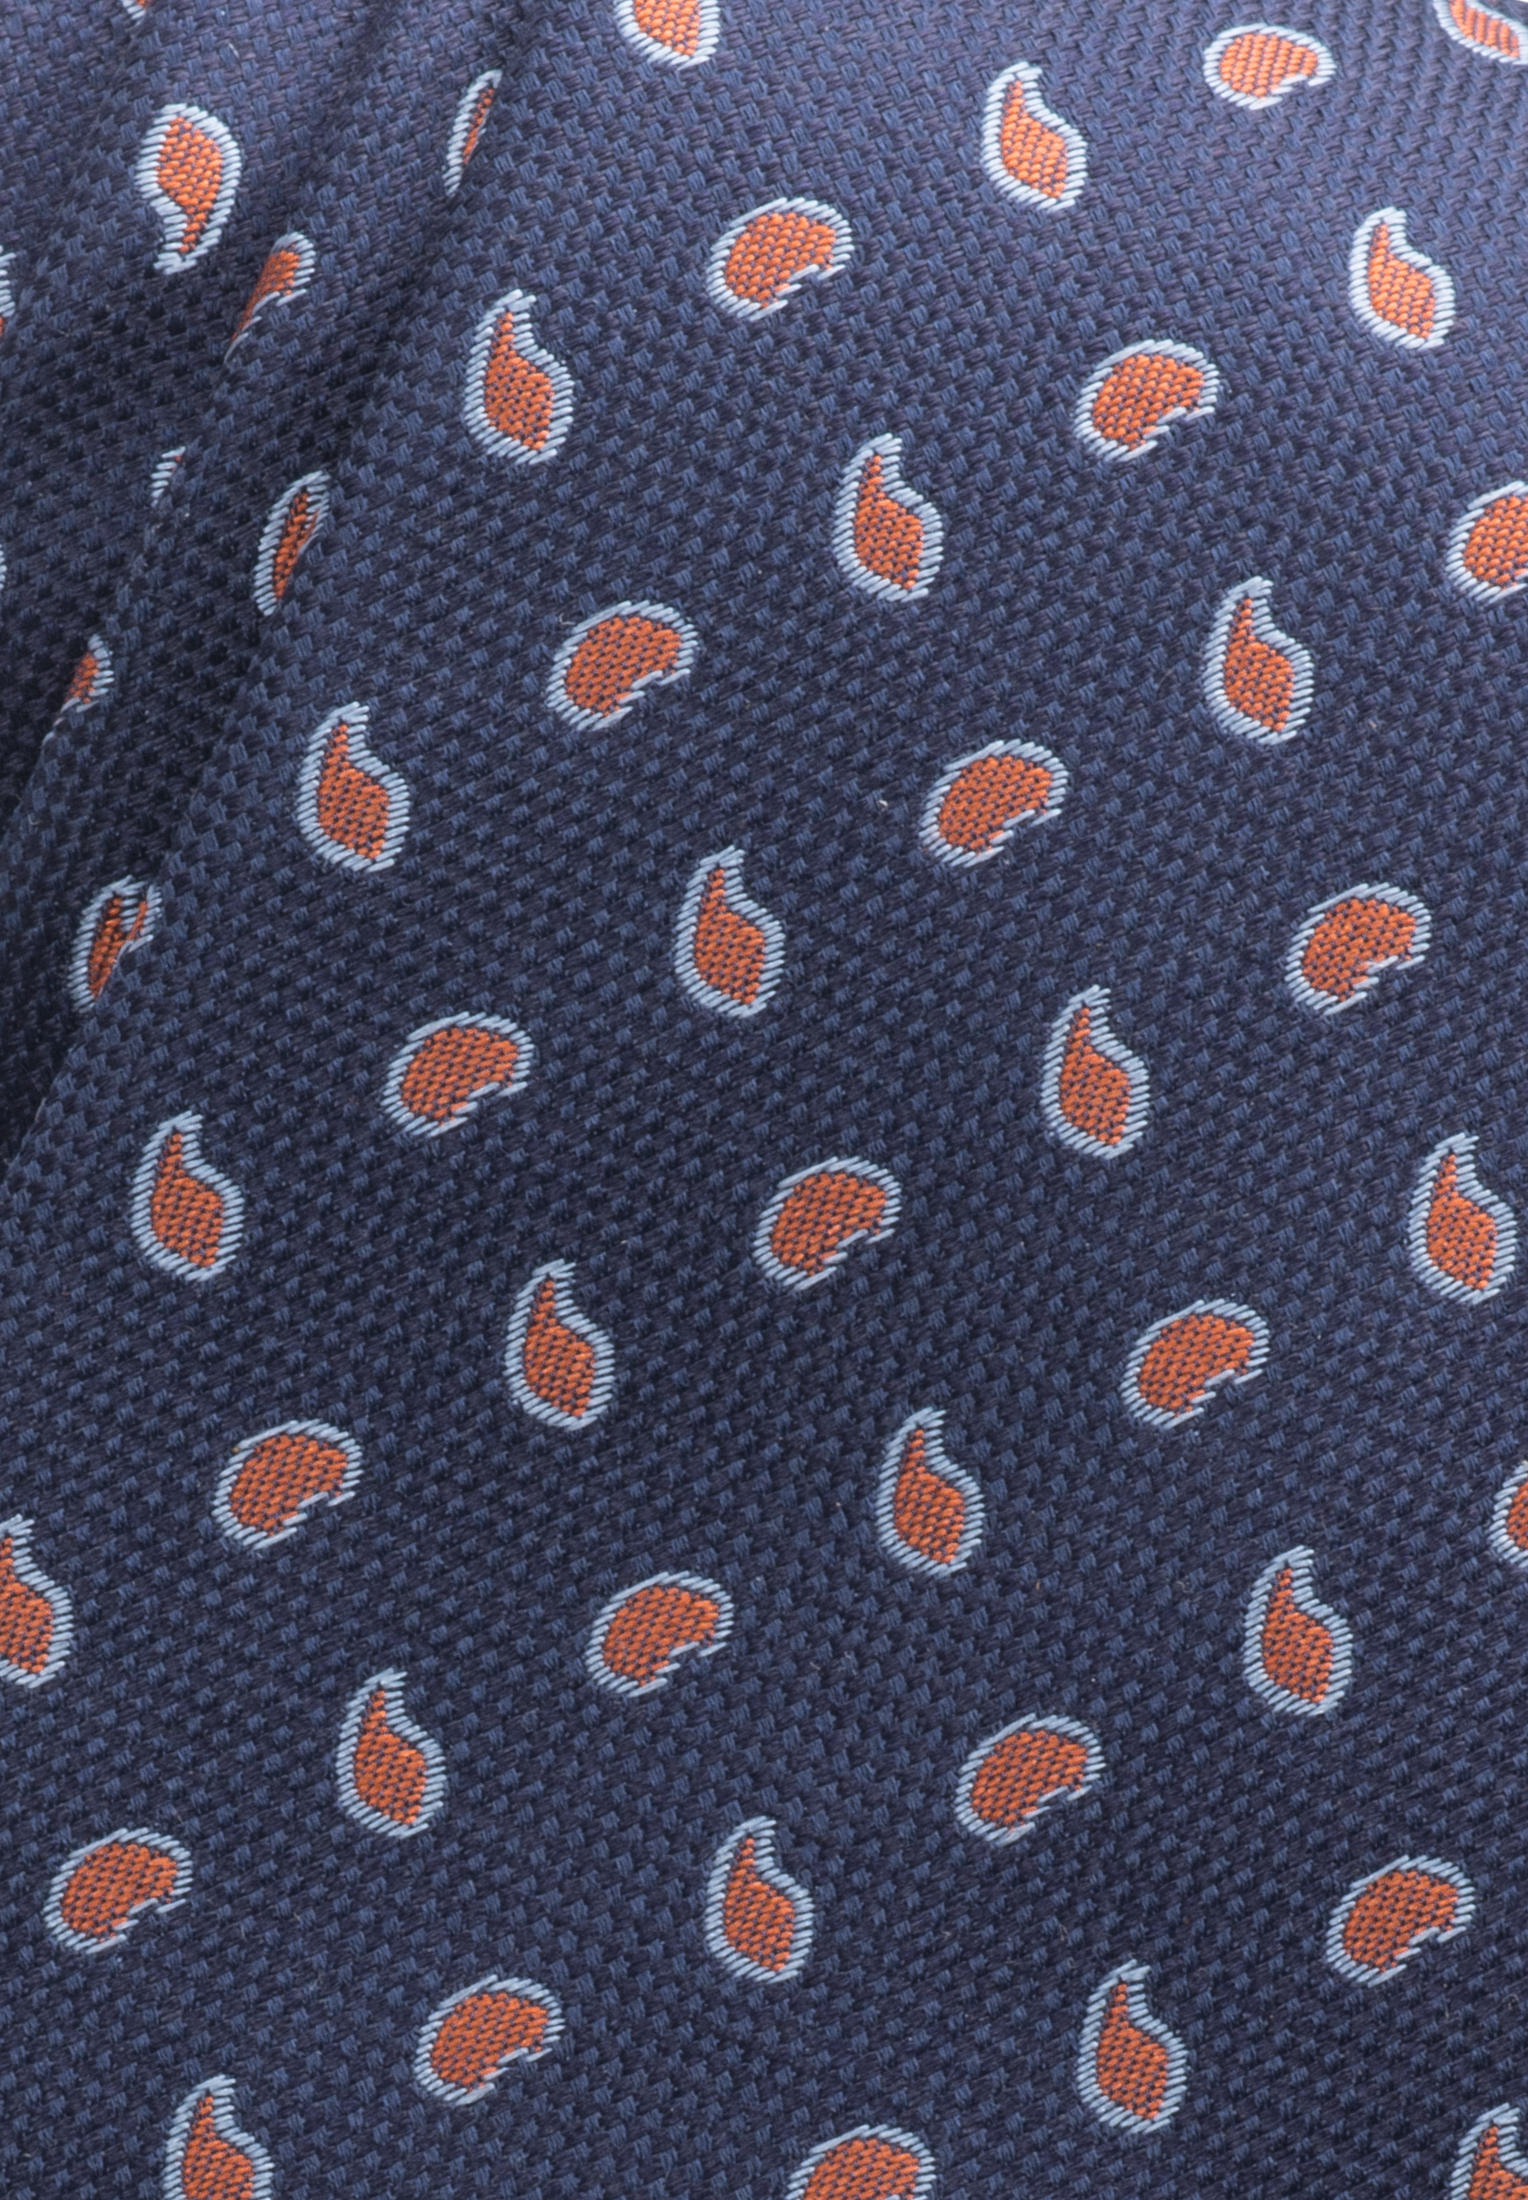 Krawatte in orange 1AC00541-08-01-142 gemustert | 142 | orange 